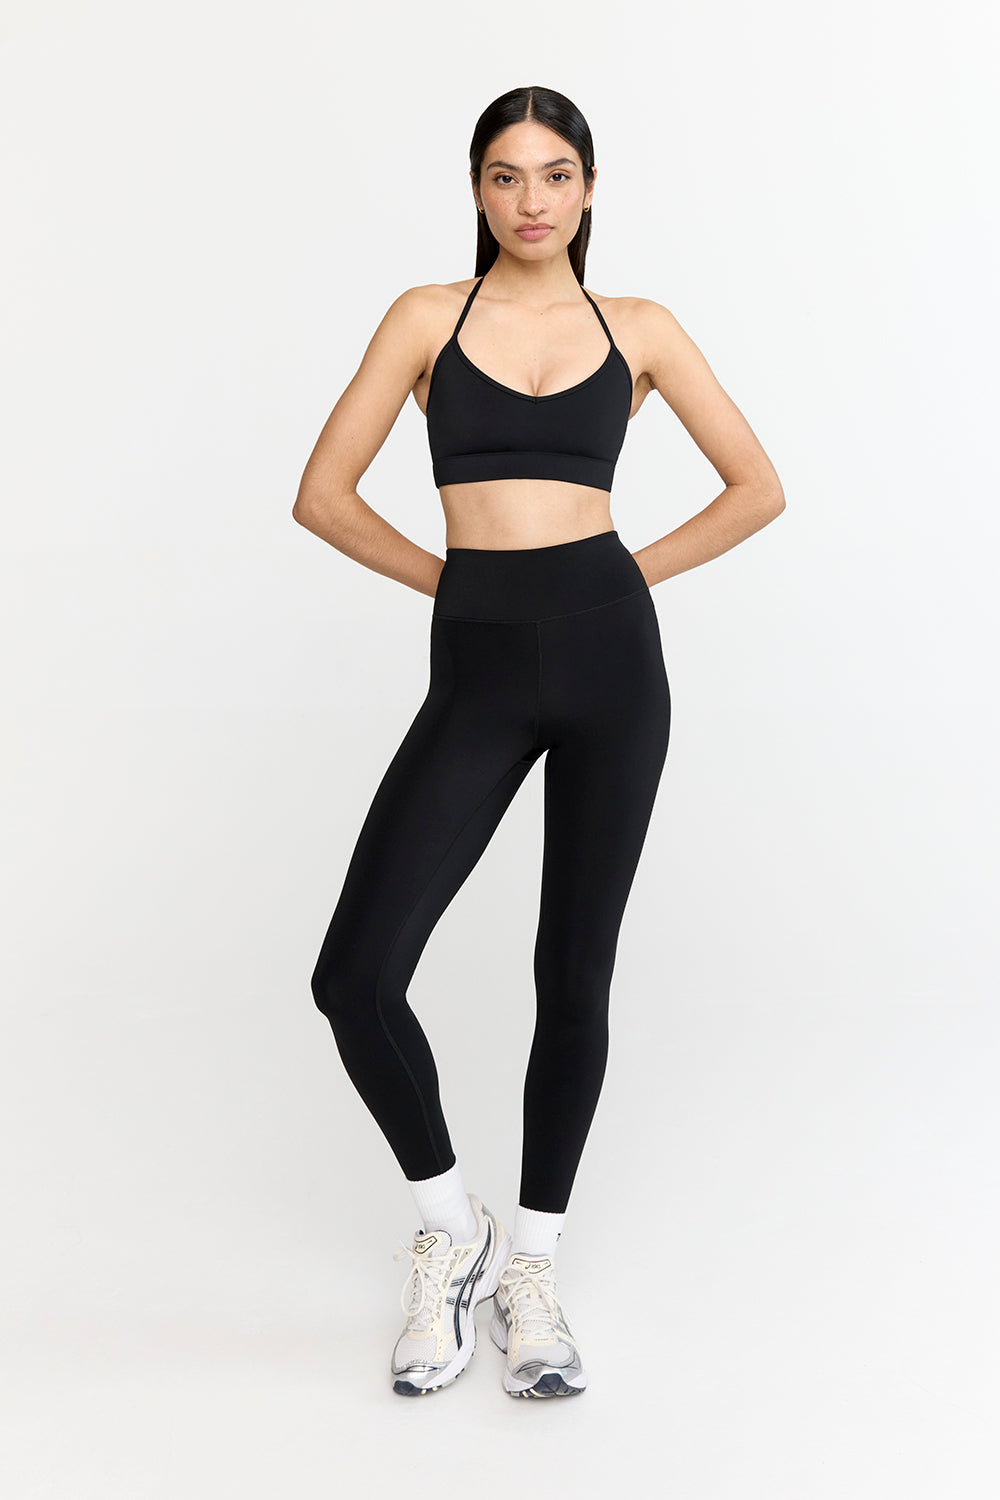 New Fashion Super Stretch Neoprene Fitness Slimming Pants Waist